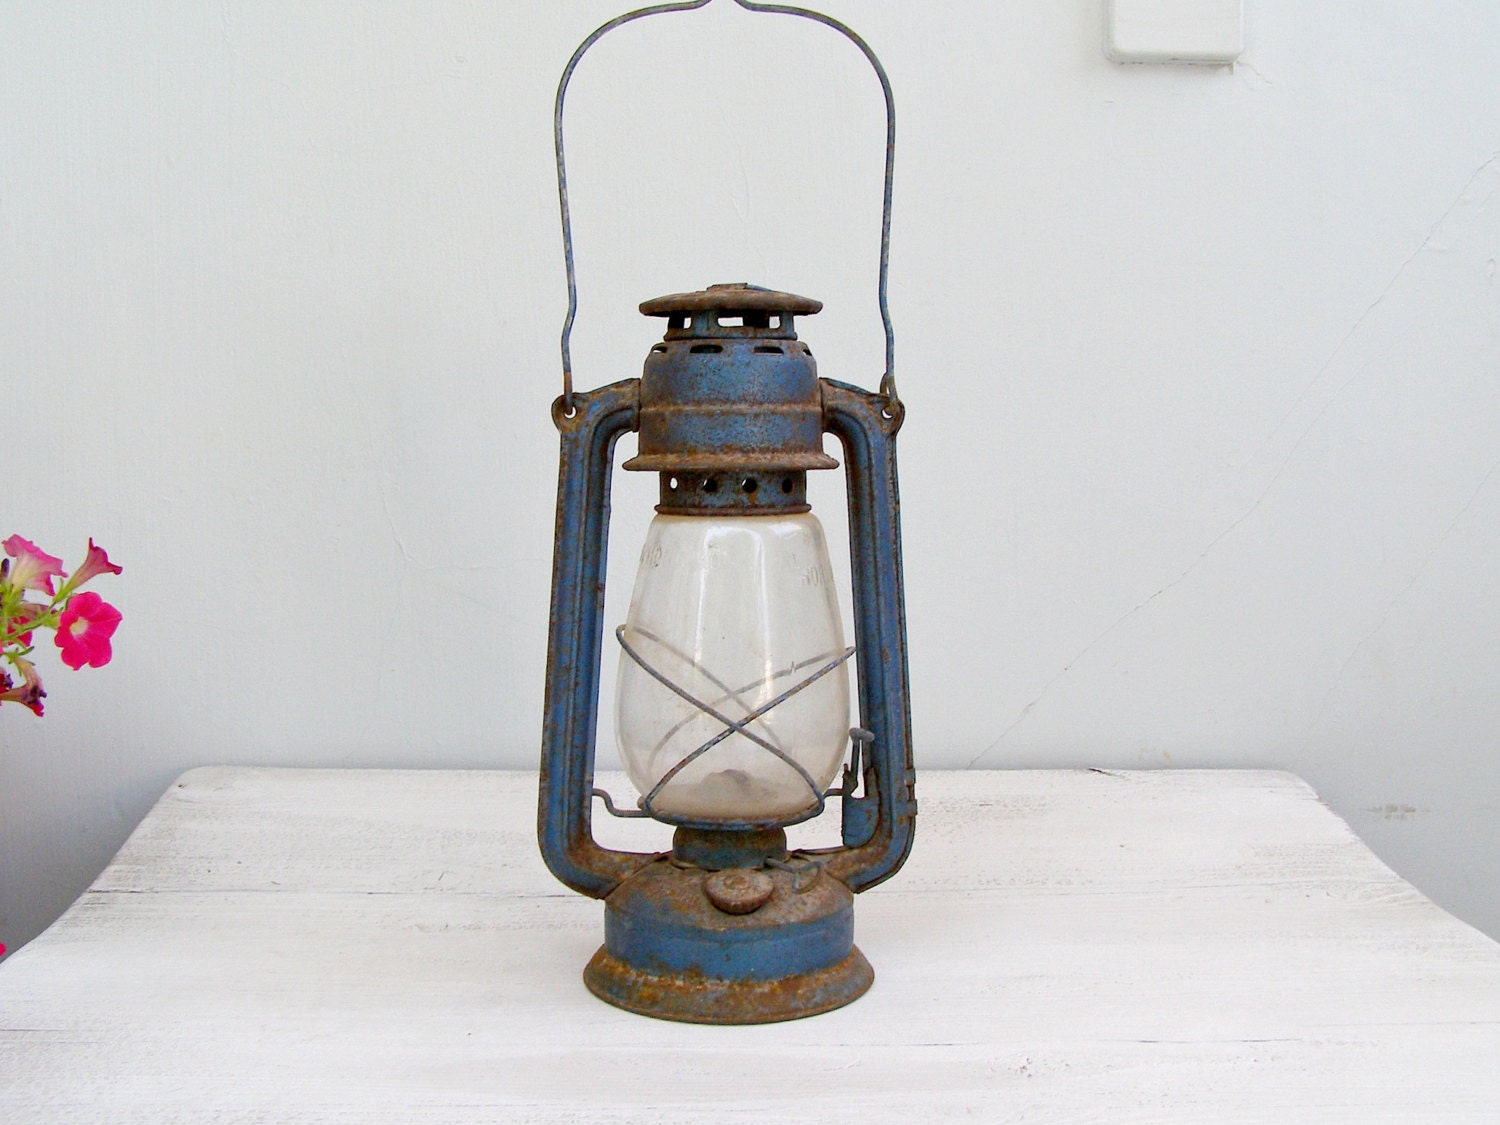 Vintage Blue Lantern Lamp, Rusted Big Railroad Lamp, Farmhouse decor, Industrial chic, Garden decoration, Gift for man - MeshuMaSH